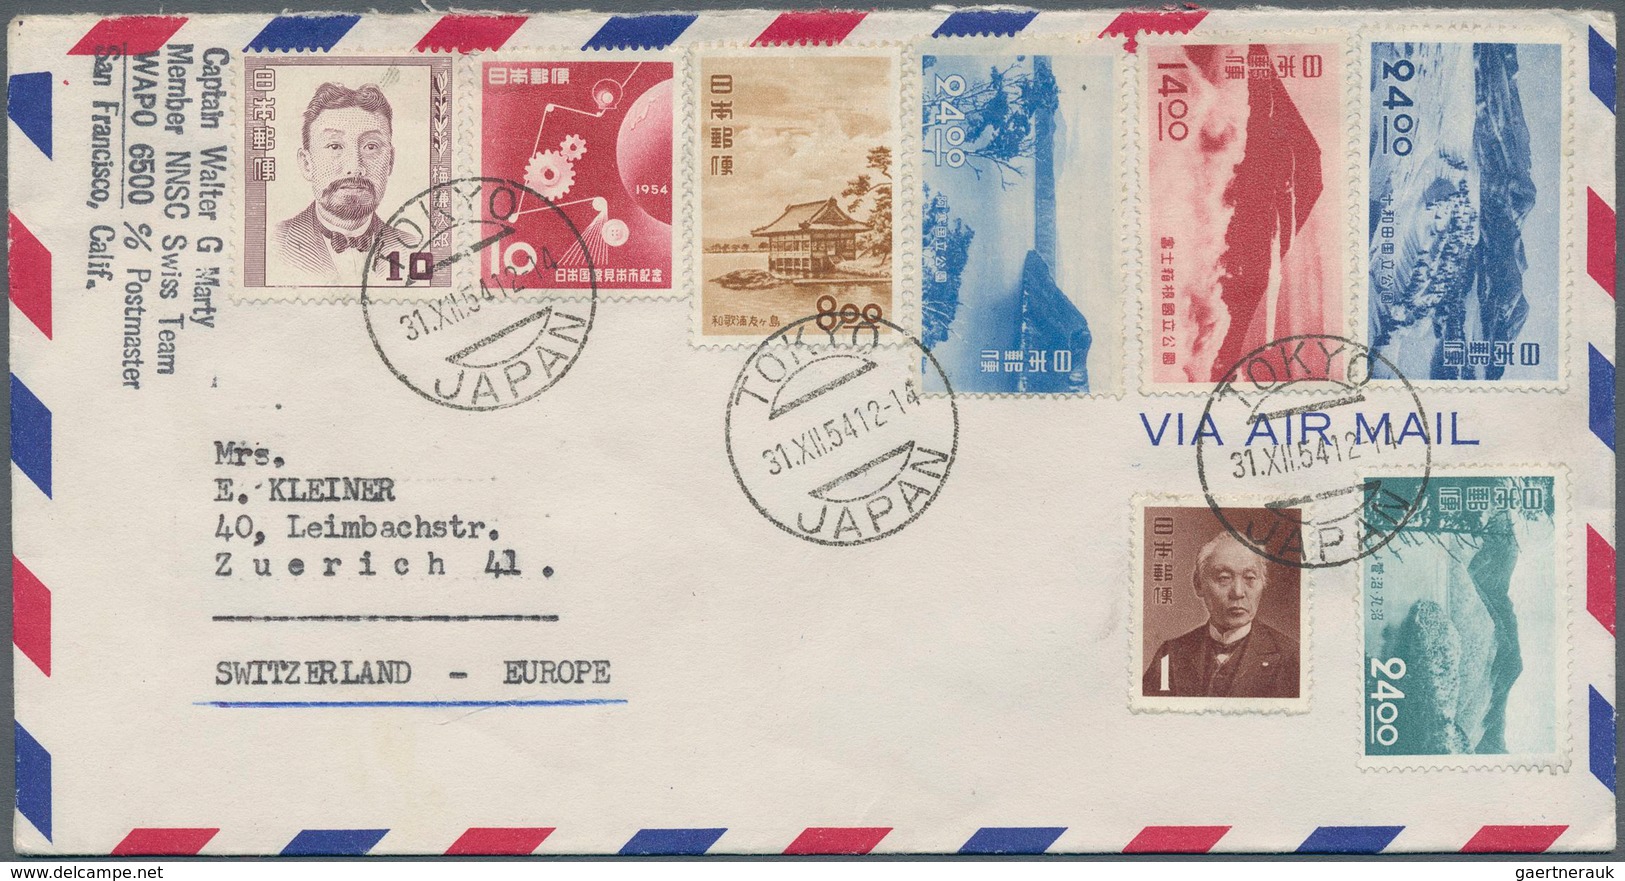 23371 Korea-Süd: 1954/55, Korean War, Neutral Nations Supervisiory Comittee NNSC Airmail Covers (9) Forwar - Corée Du Sud